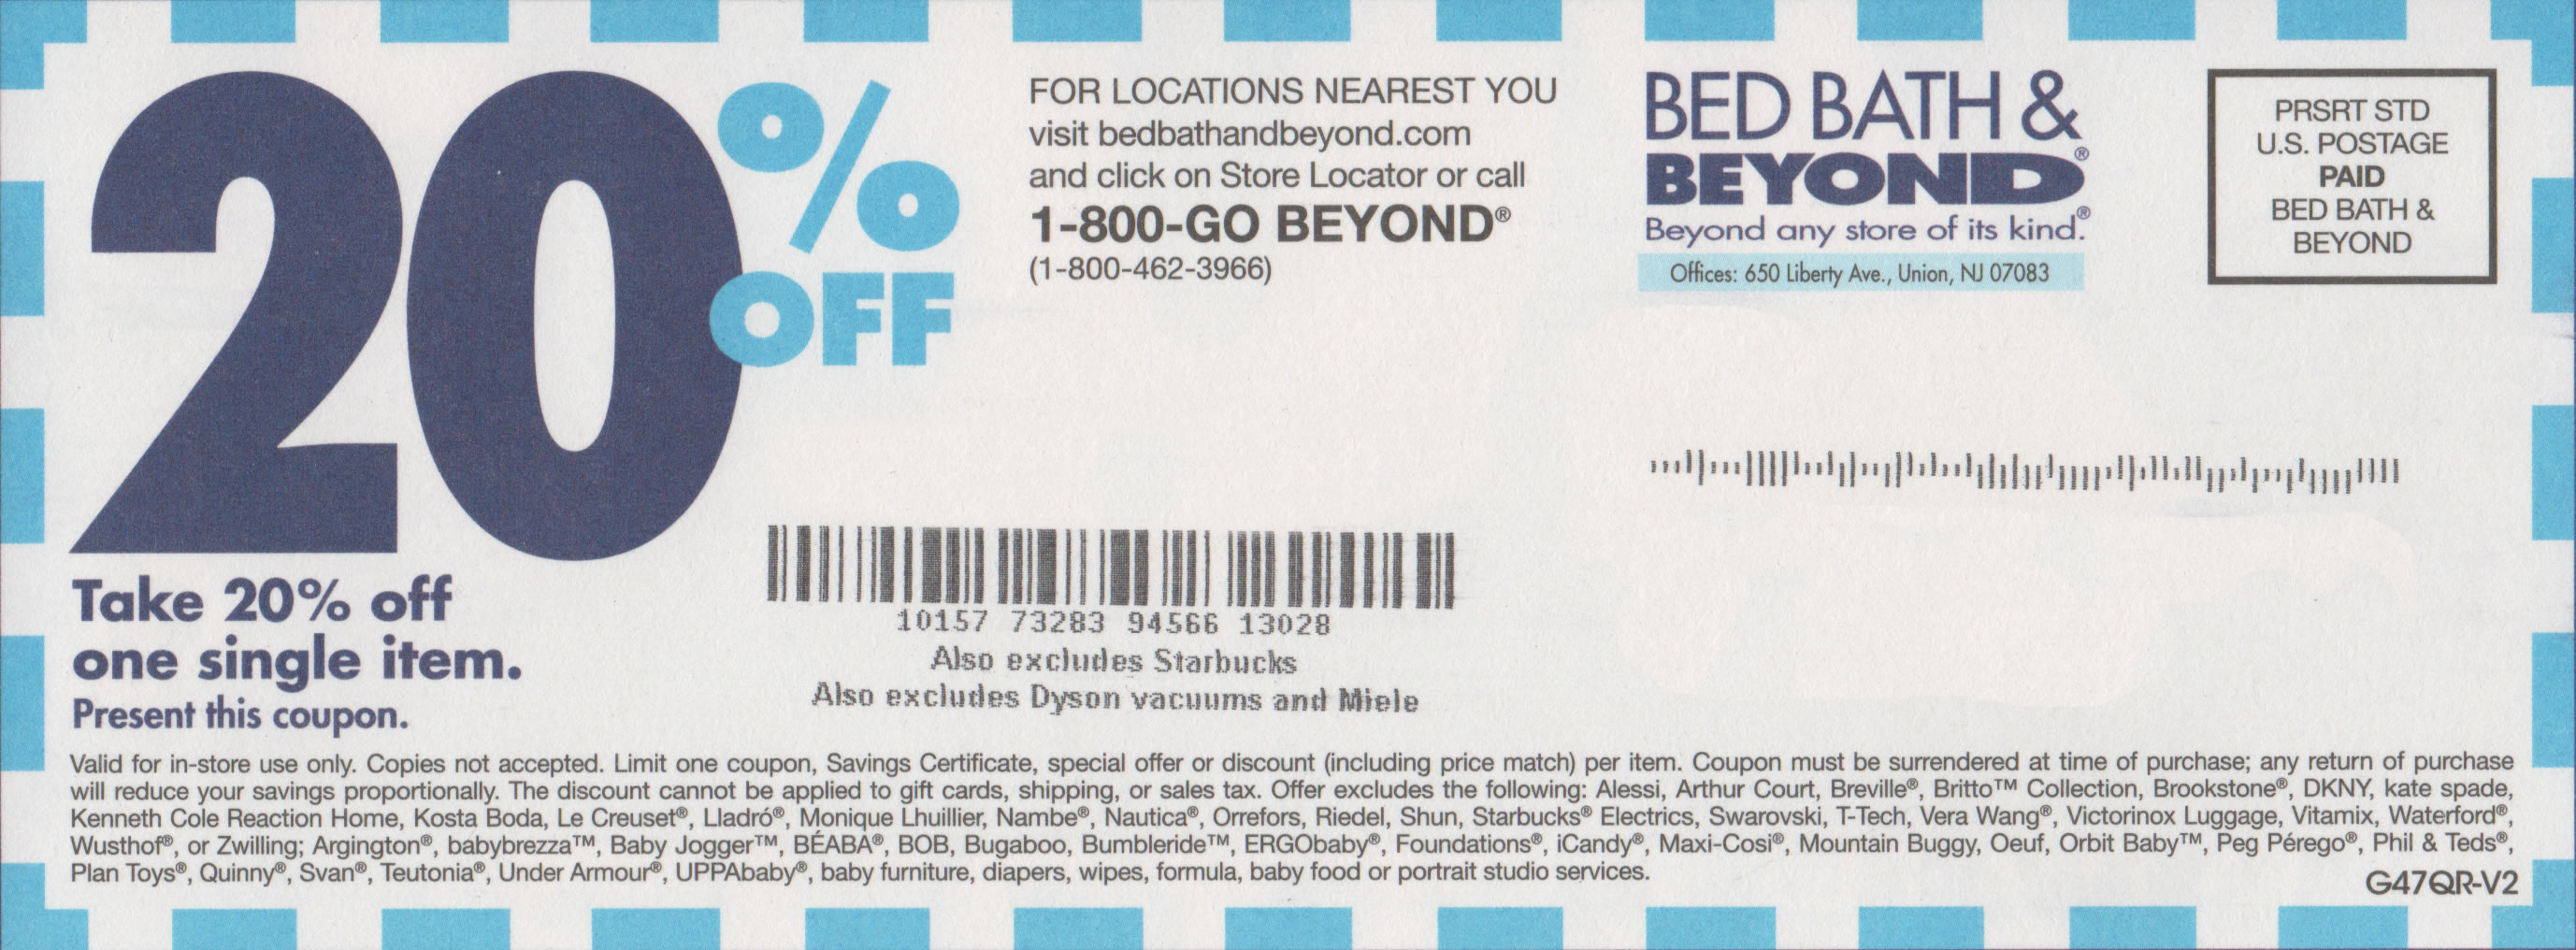 off coupon The 20% off bed bath and beyond printable coupon